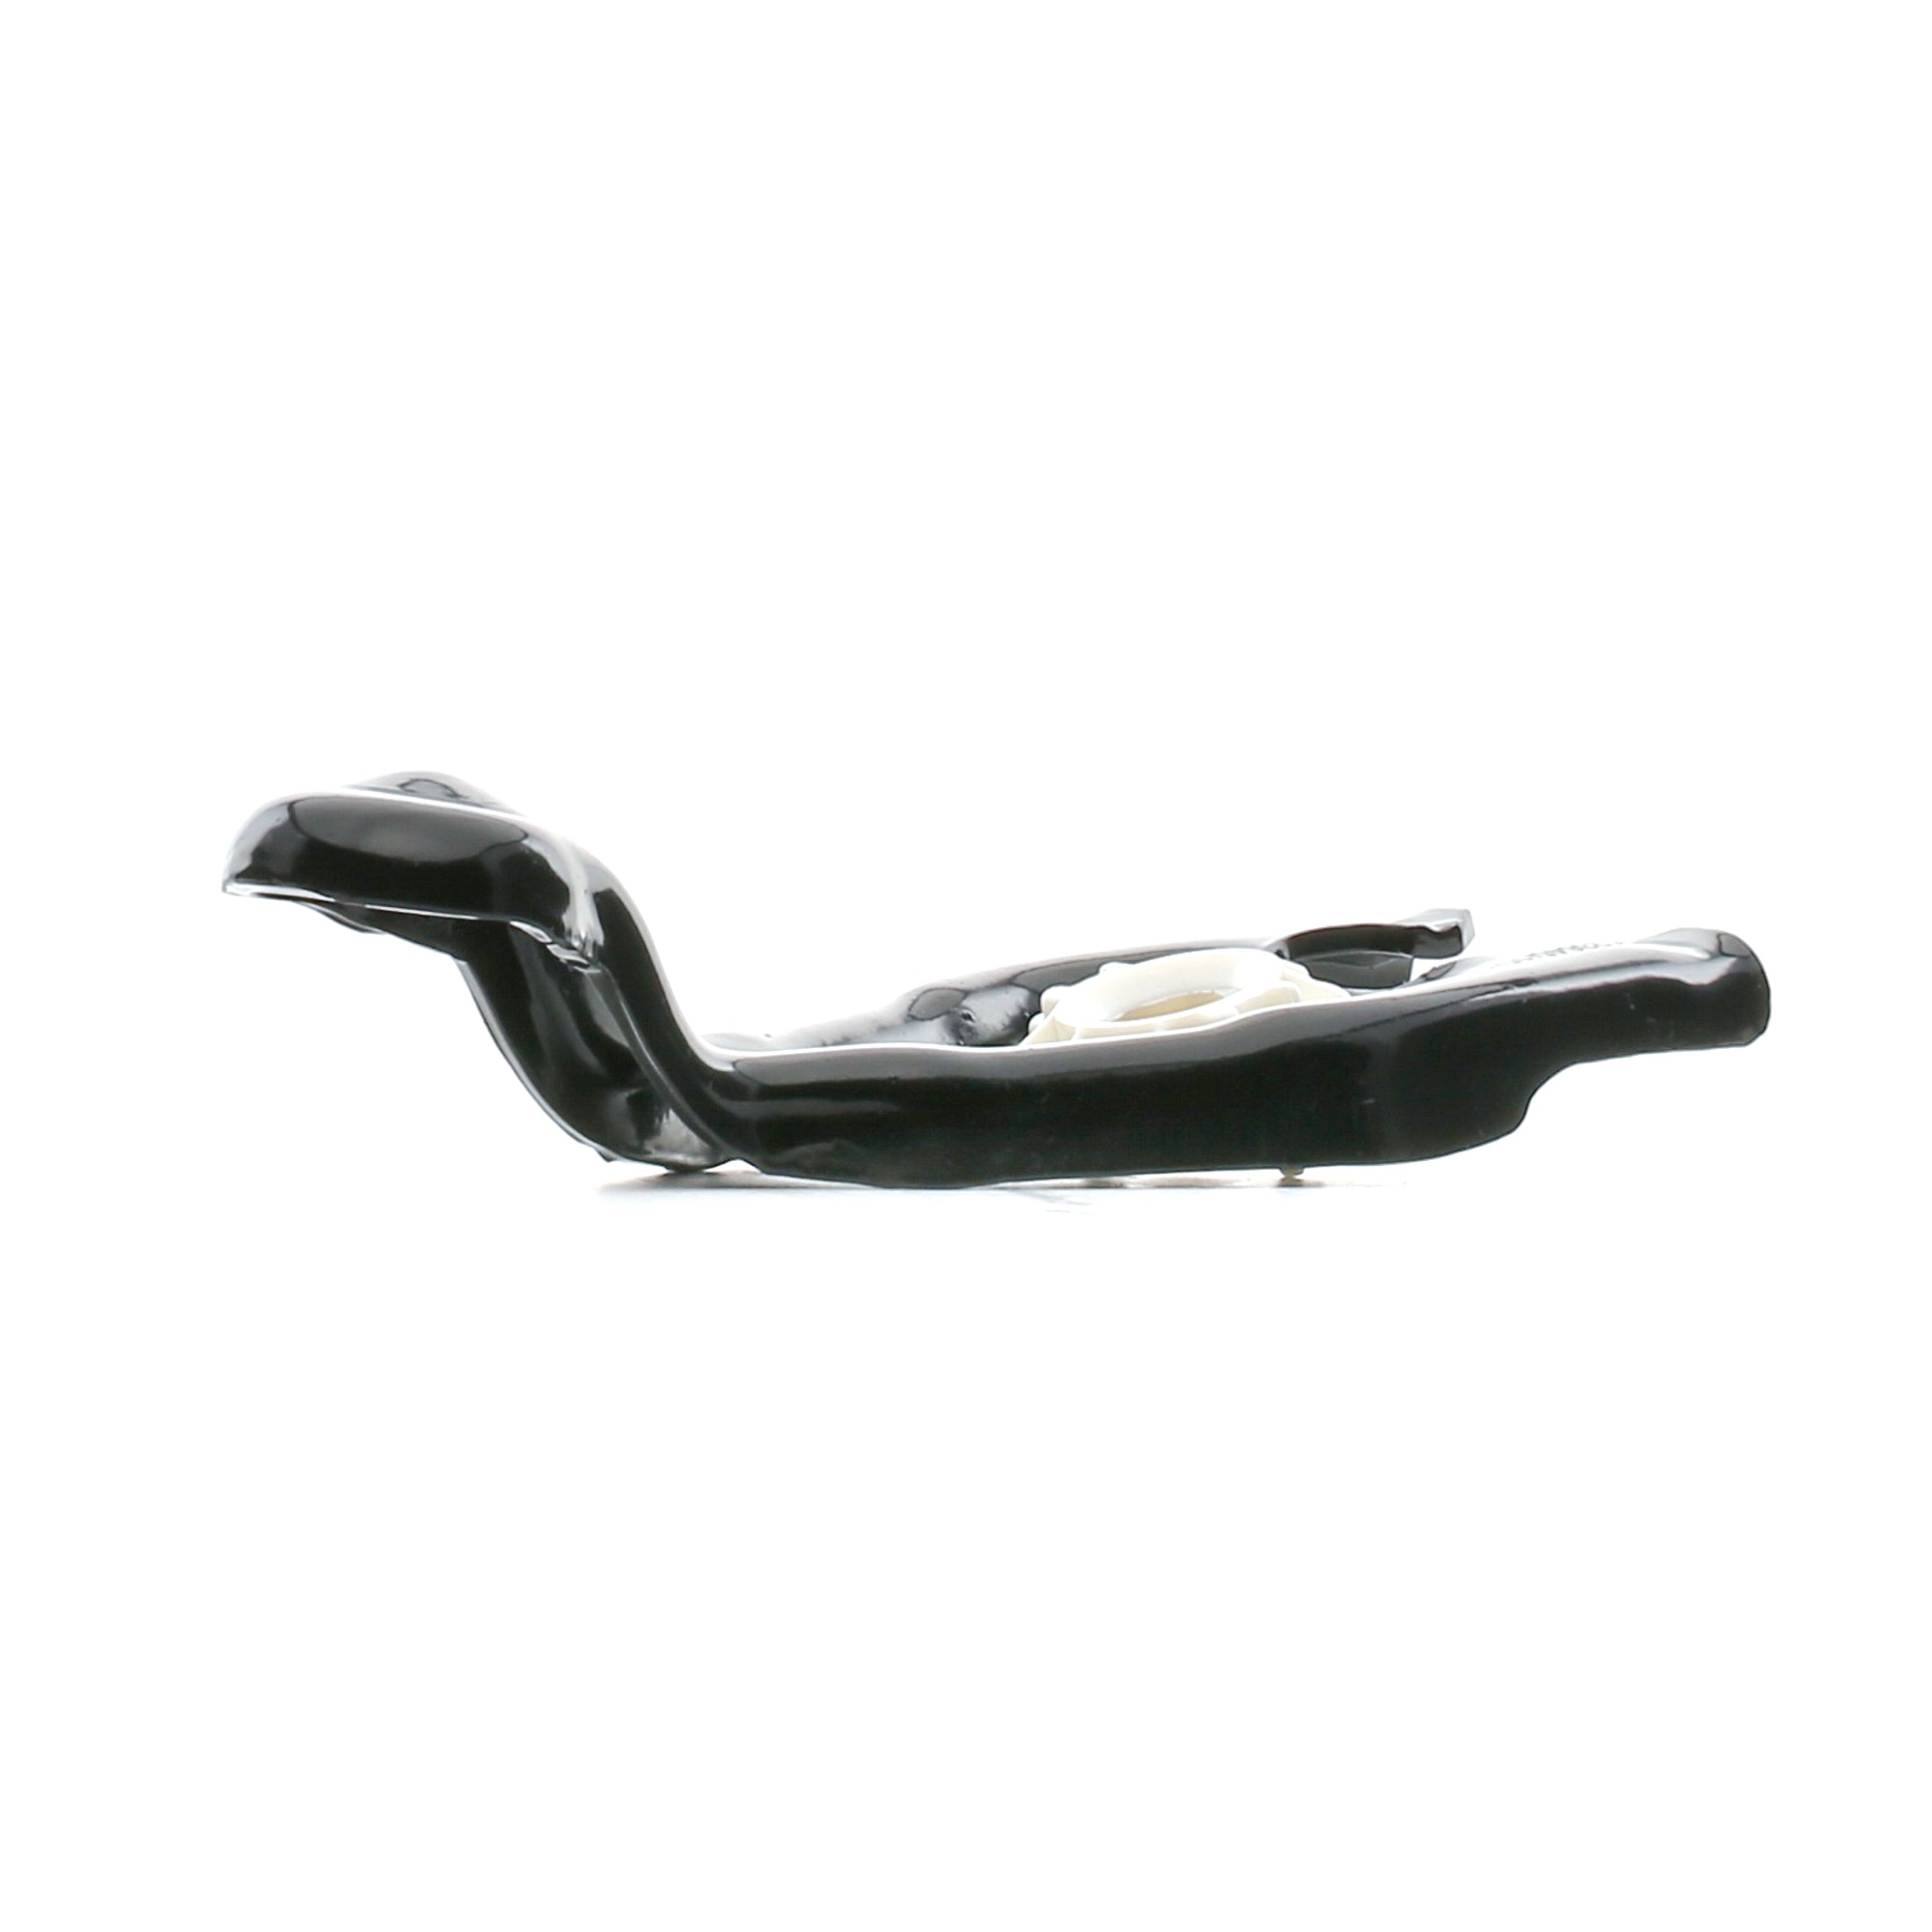 Peugeot 308 Release fork 15738286 STARK SKRFC-3500006 online buy